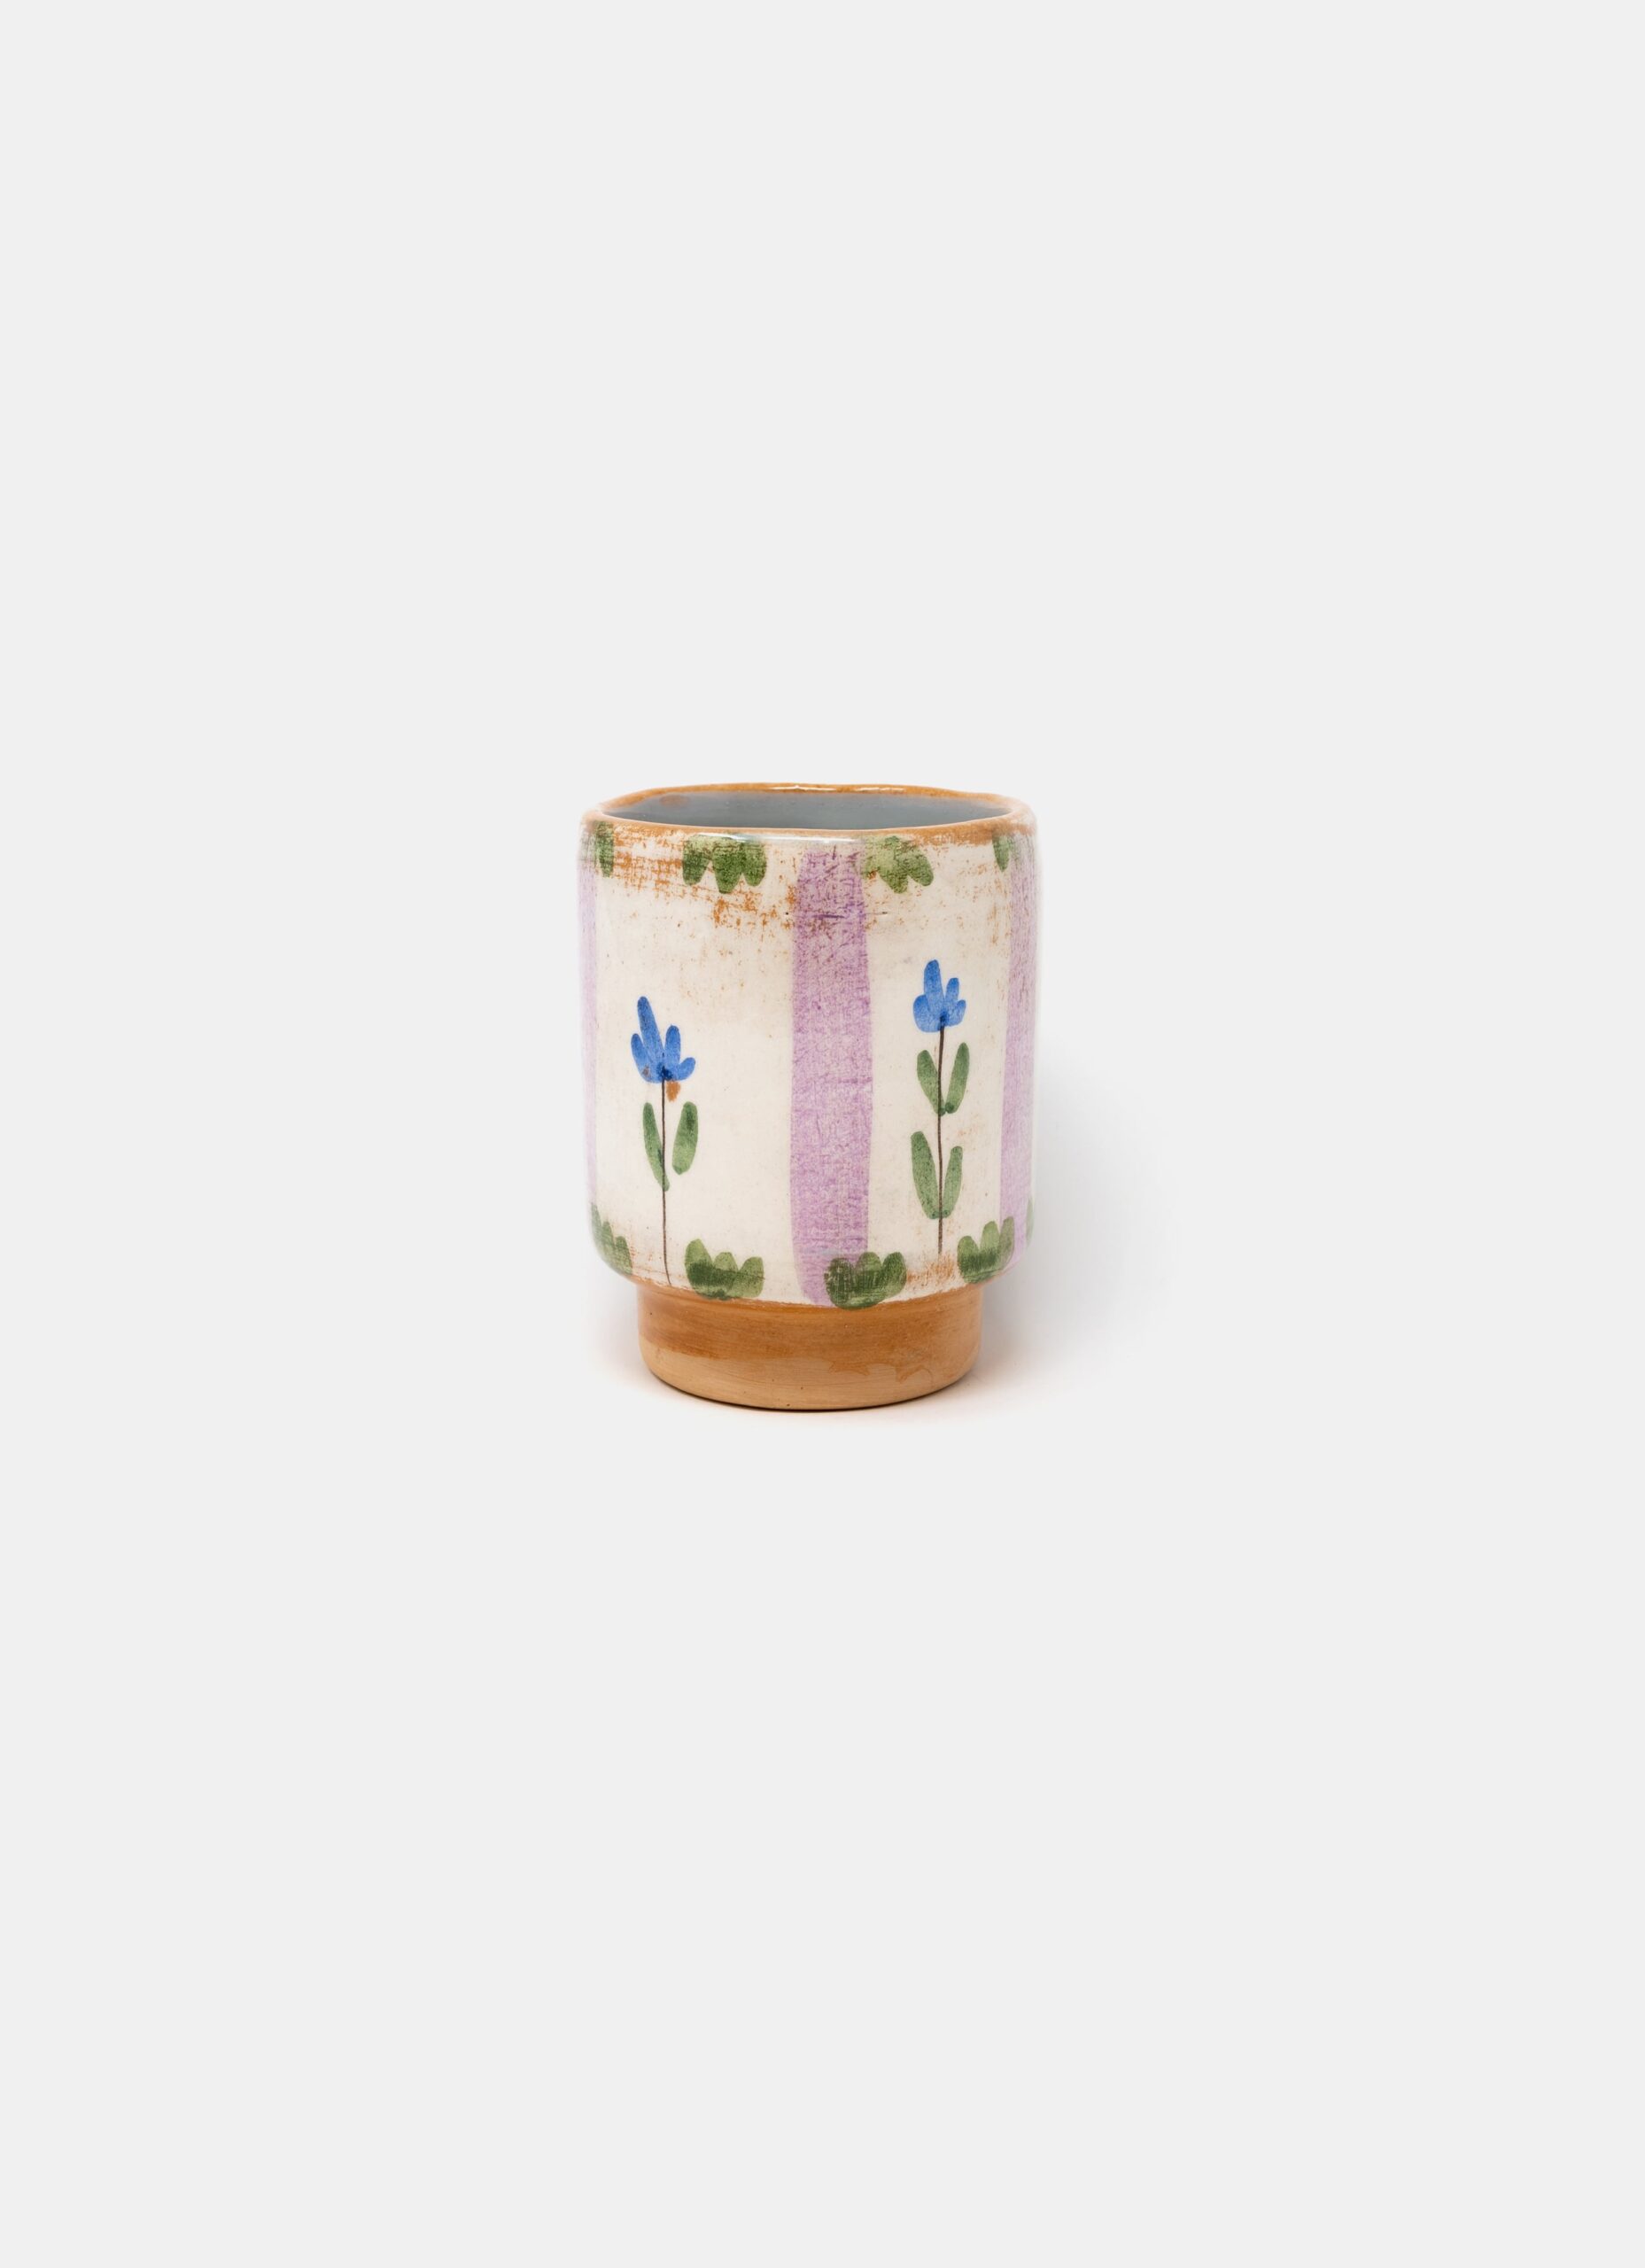 Ori Ceramic - Hand built - Hand painted - Stoneware - Mug - Motive 7